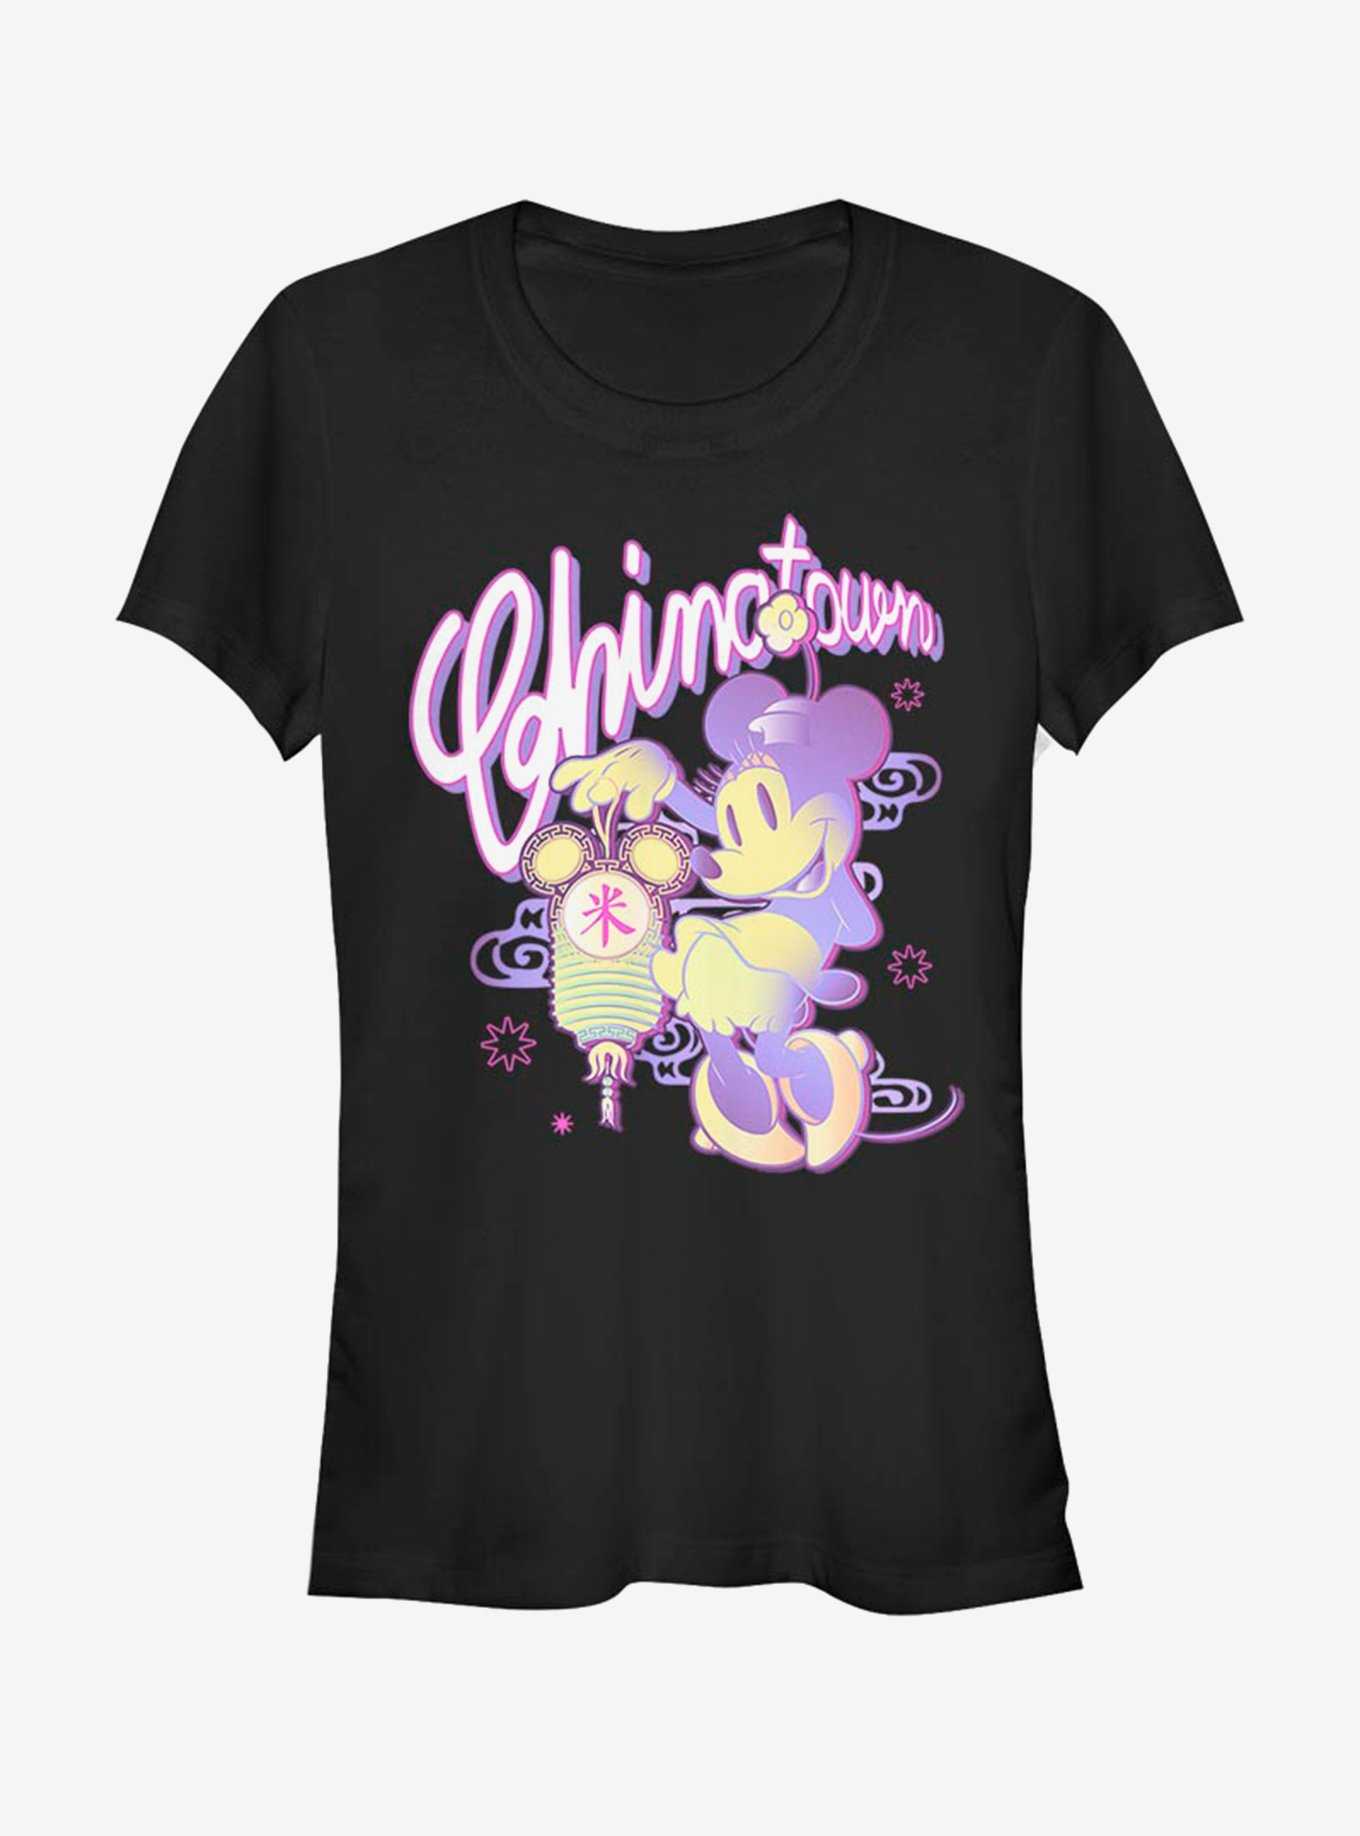 Disney Mini Mouse Chinatown Minnie Girls T-Shirt, , hi-res